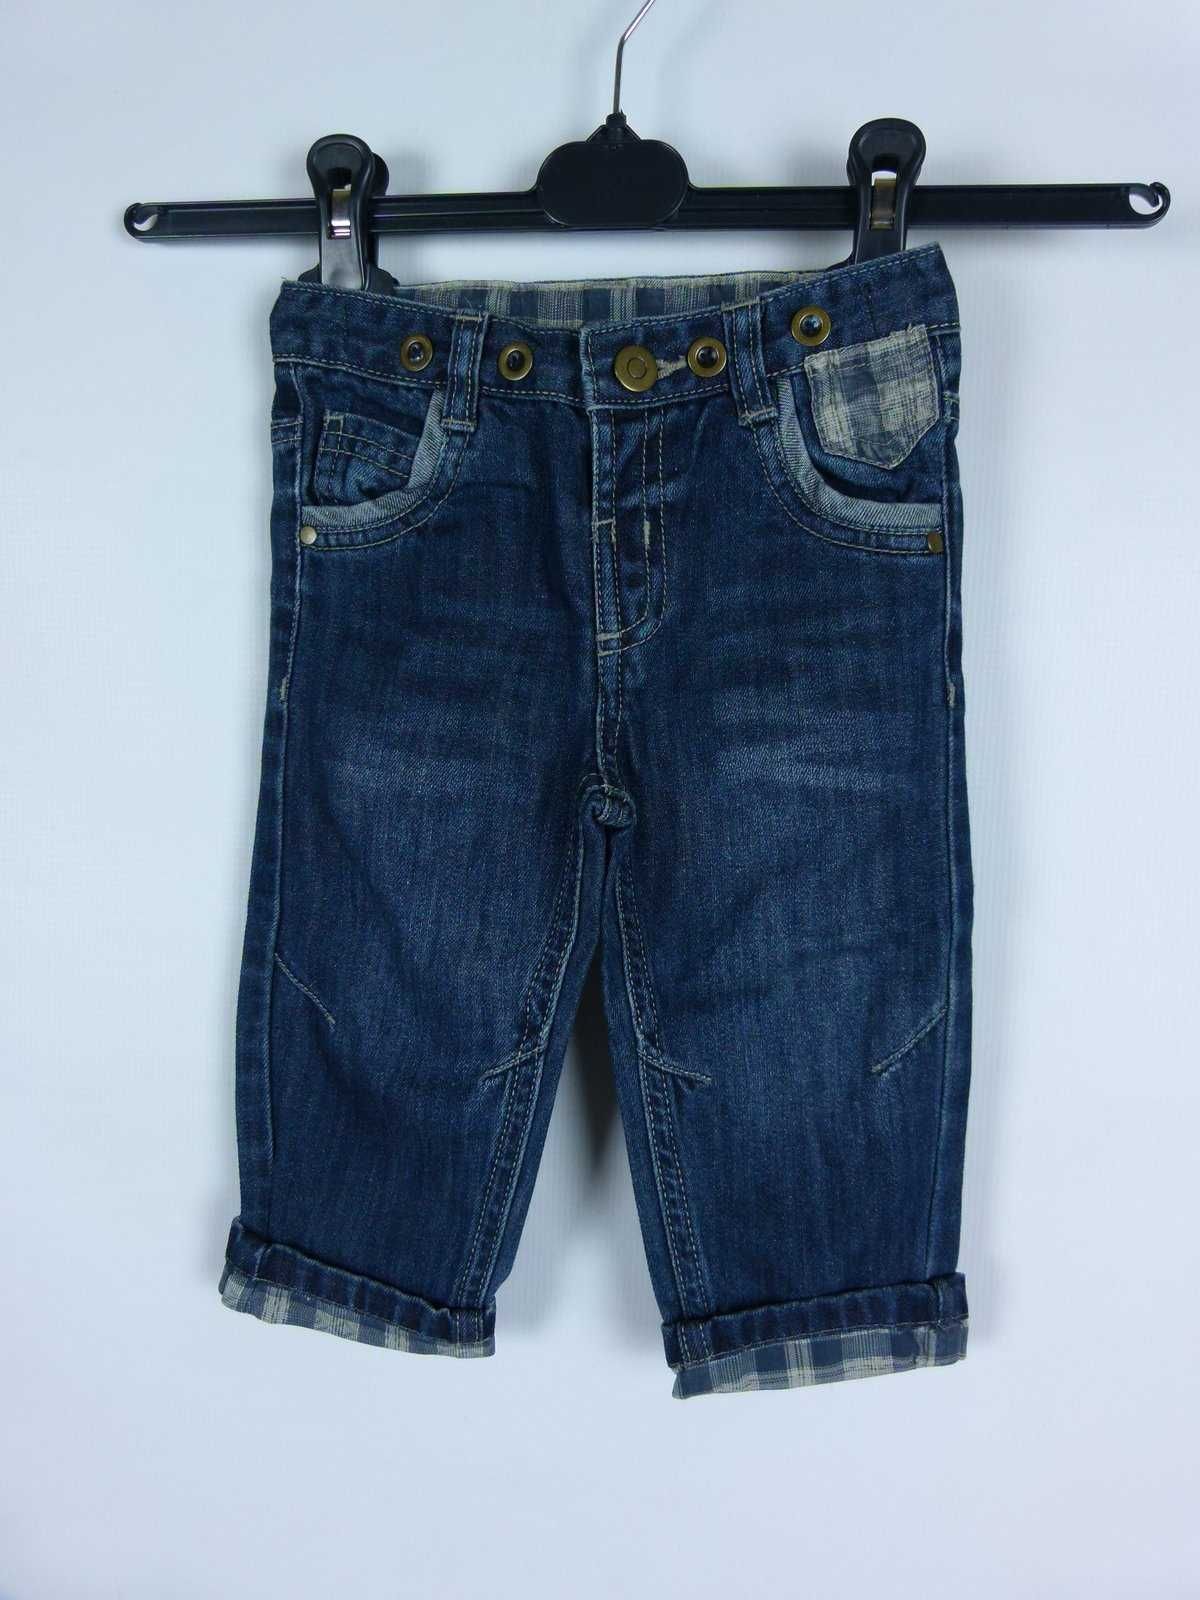 Matalan spodnie jeans 9 - 12 msc / 80 cm